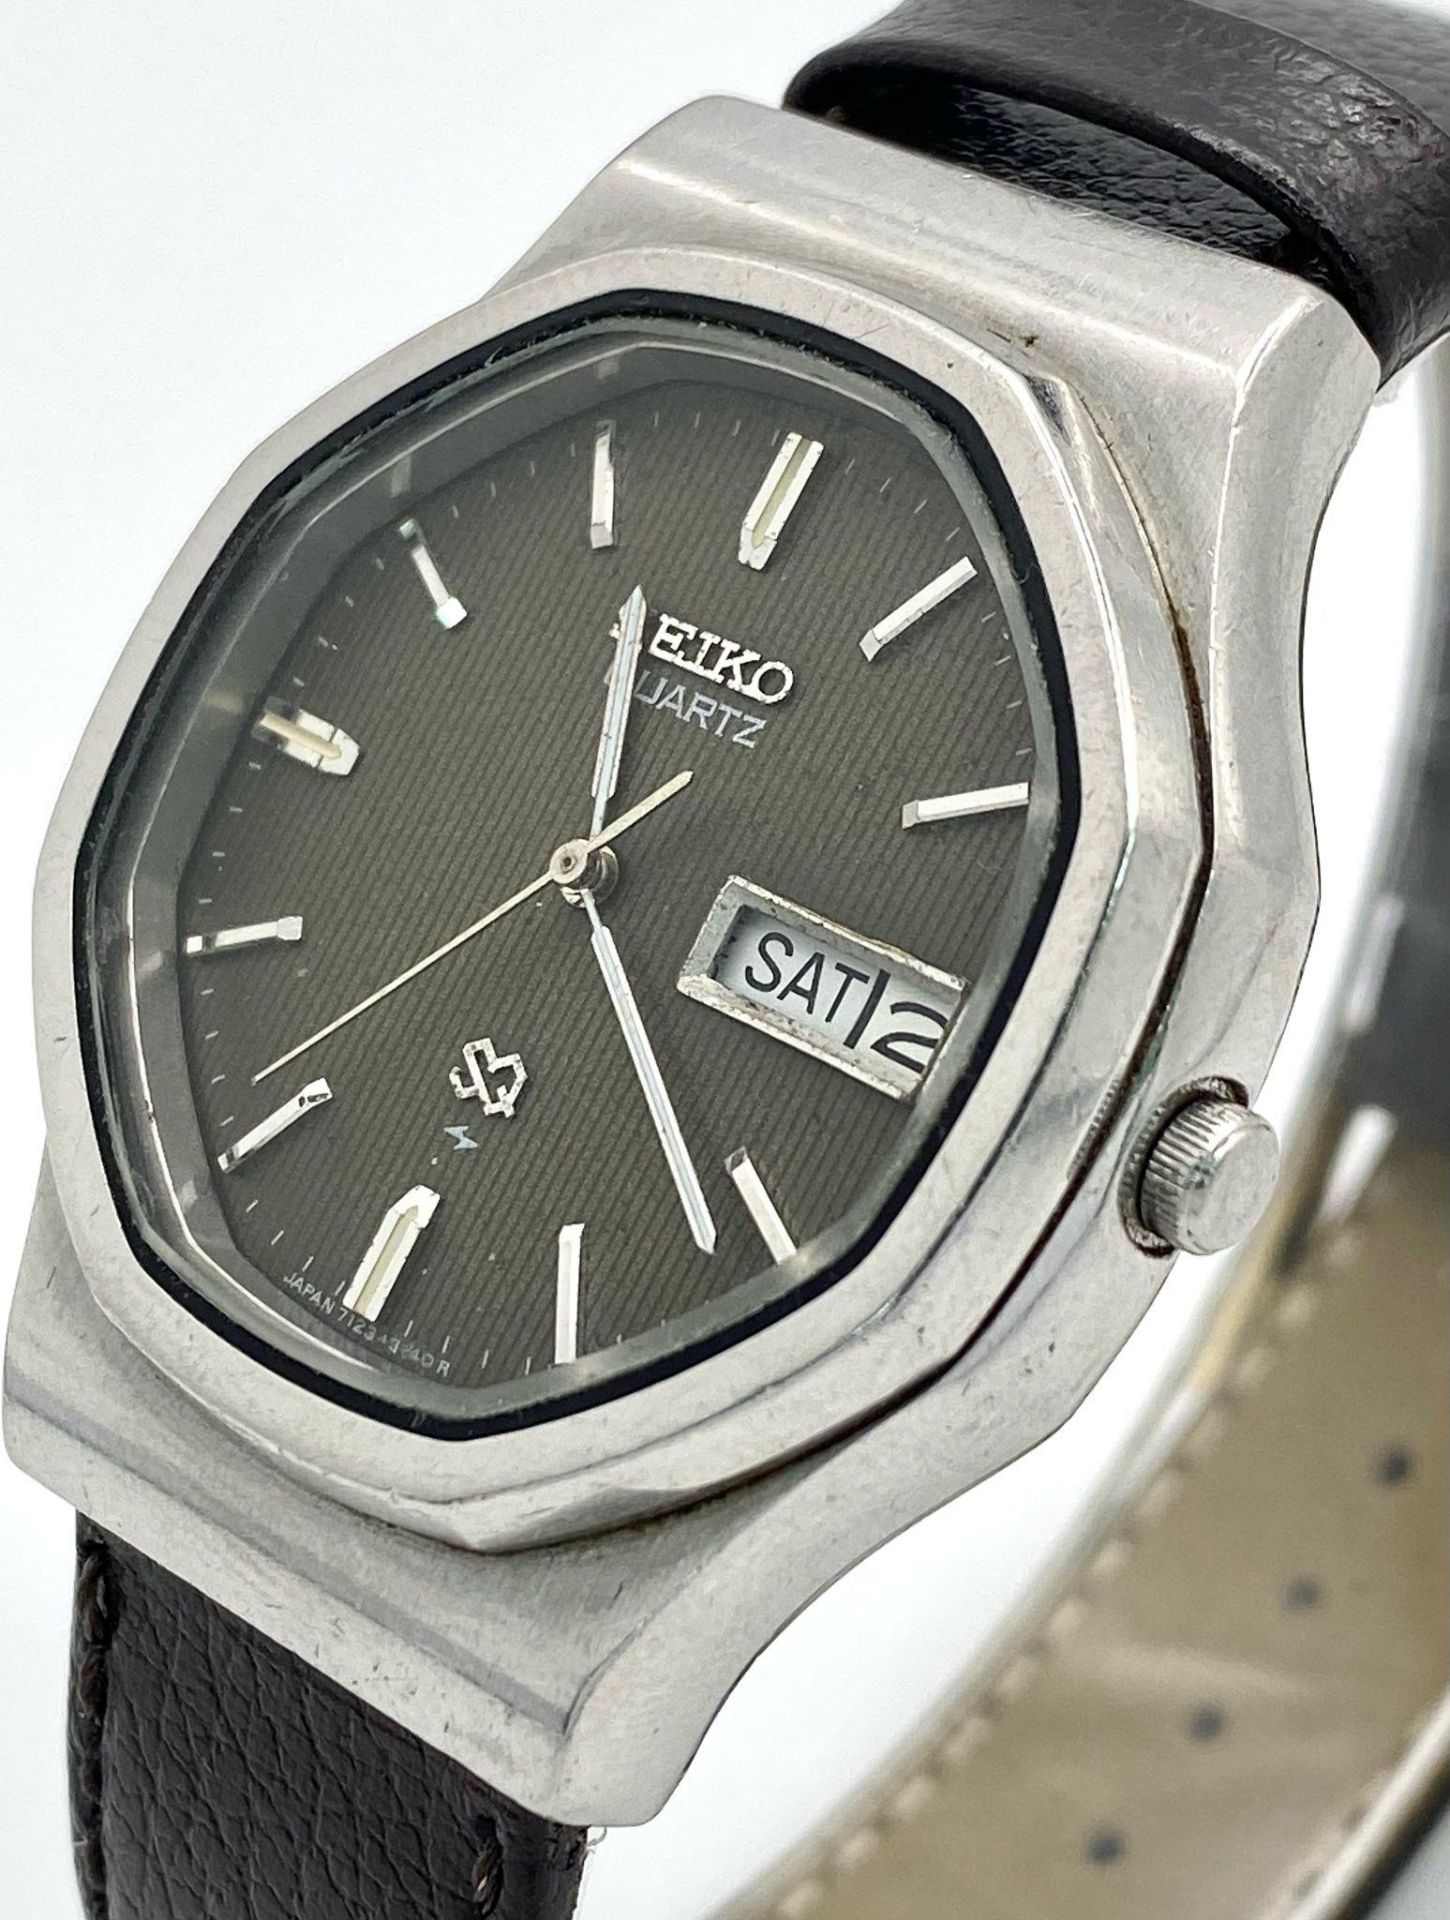 A Vintage Seiko Quartz Watch. Black leather strap. Octagonal case - 36mm. Grey dial with day/date - Bild 4 aus 7